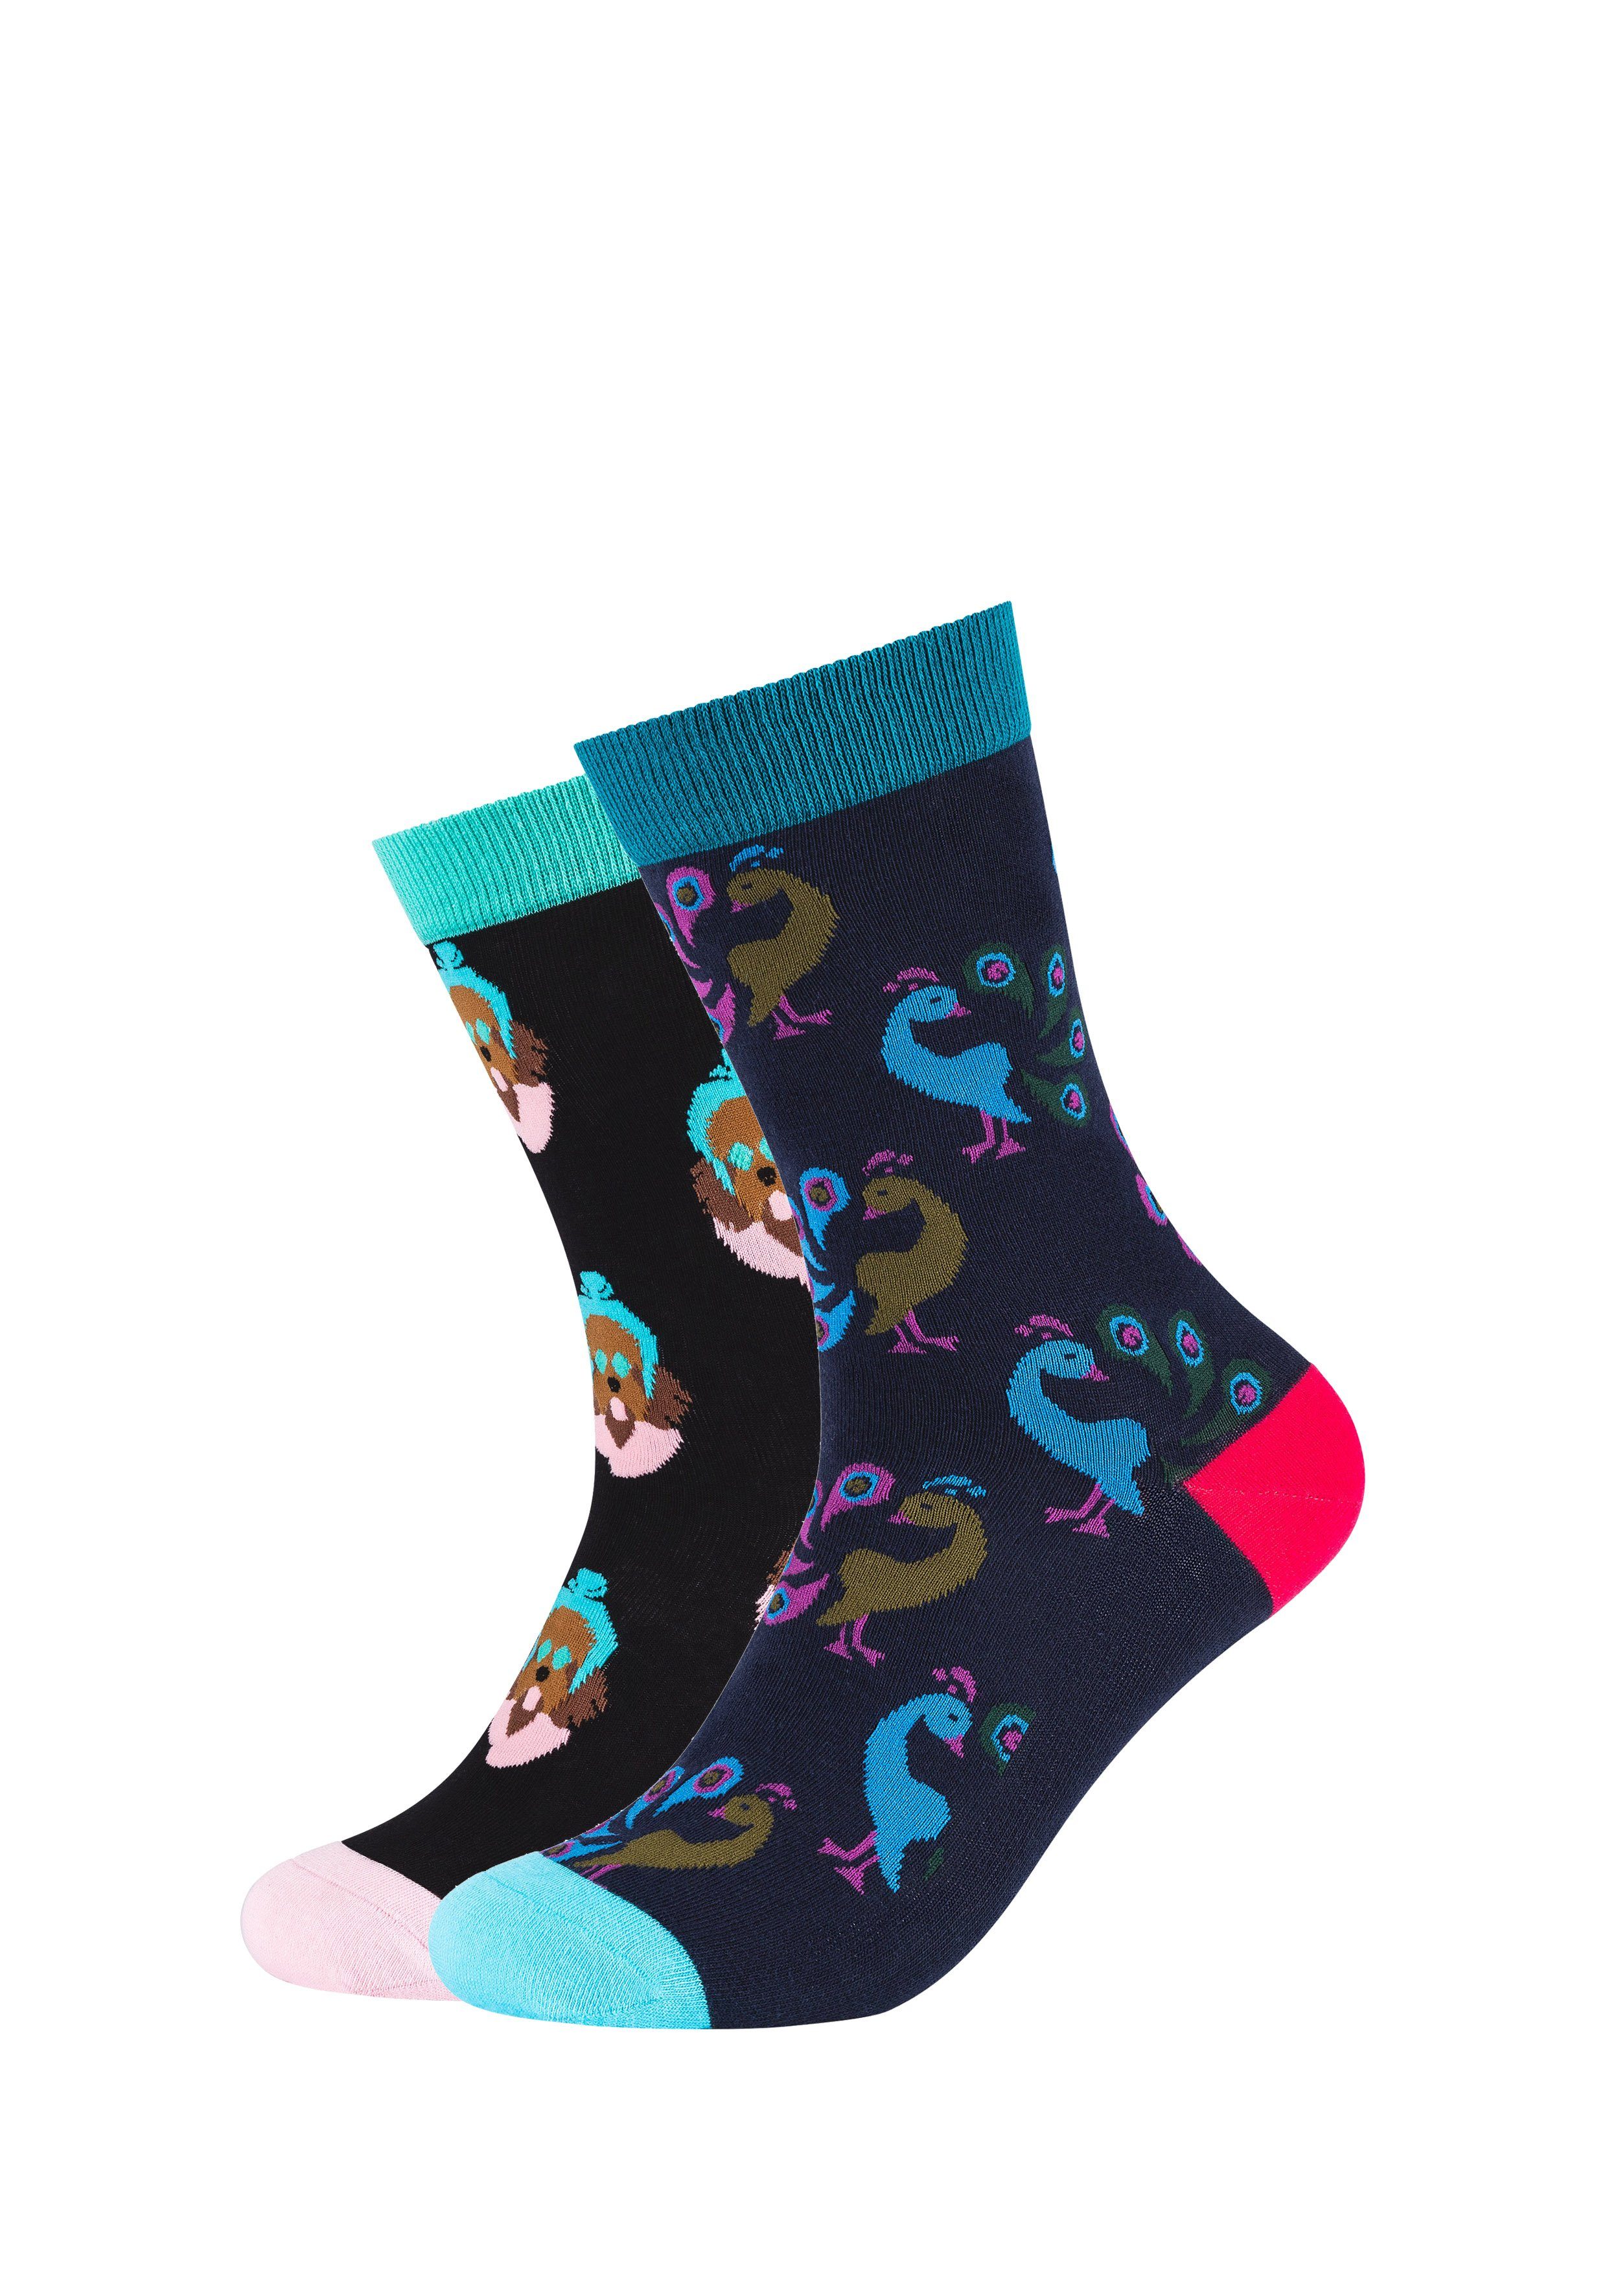 Wäsche/Bademode Socken Fun Socks Socken Dogs & Peacocks (2-Paar) mit schönen Motiven